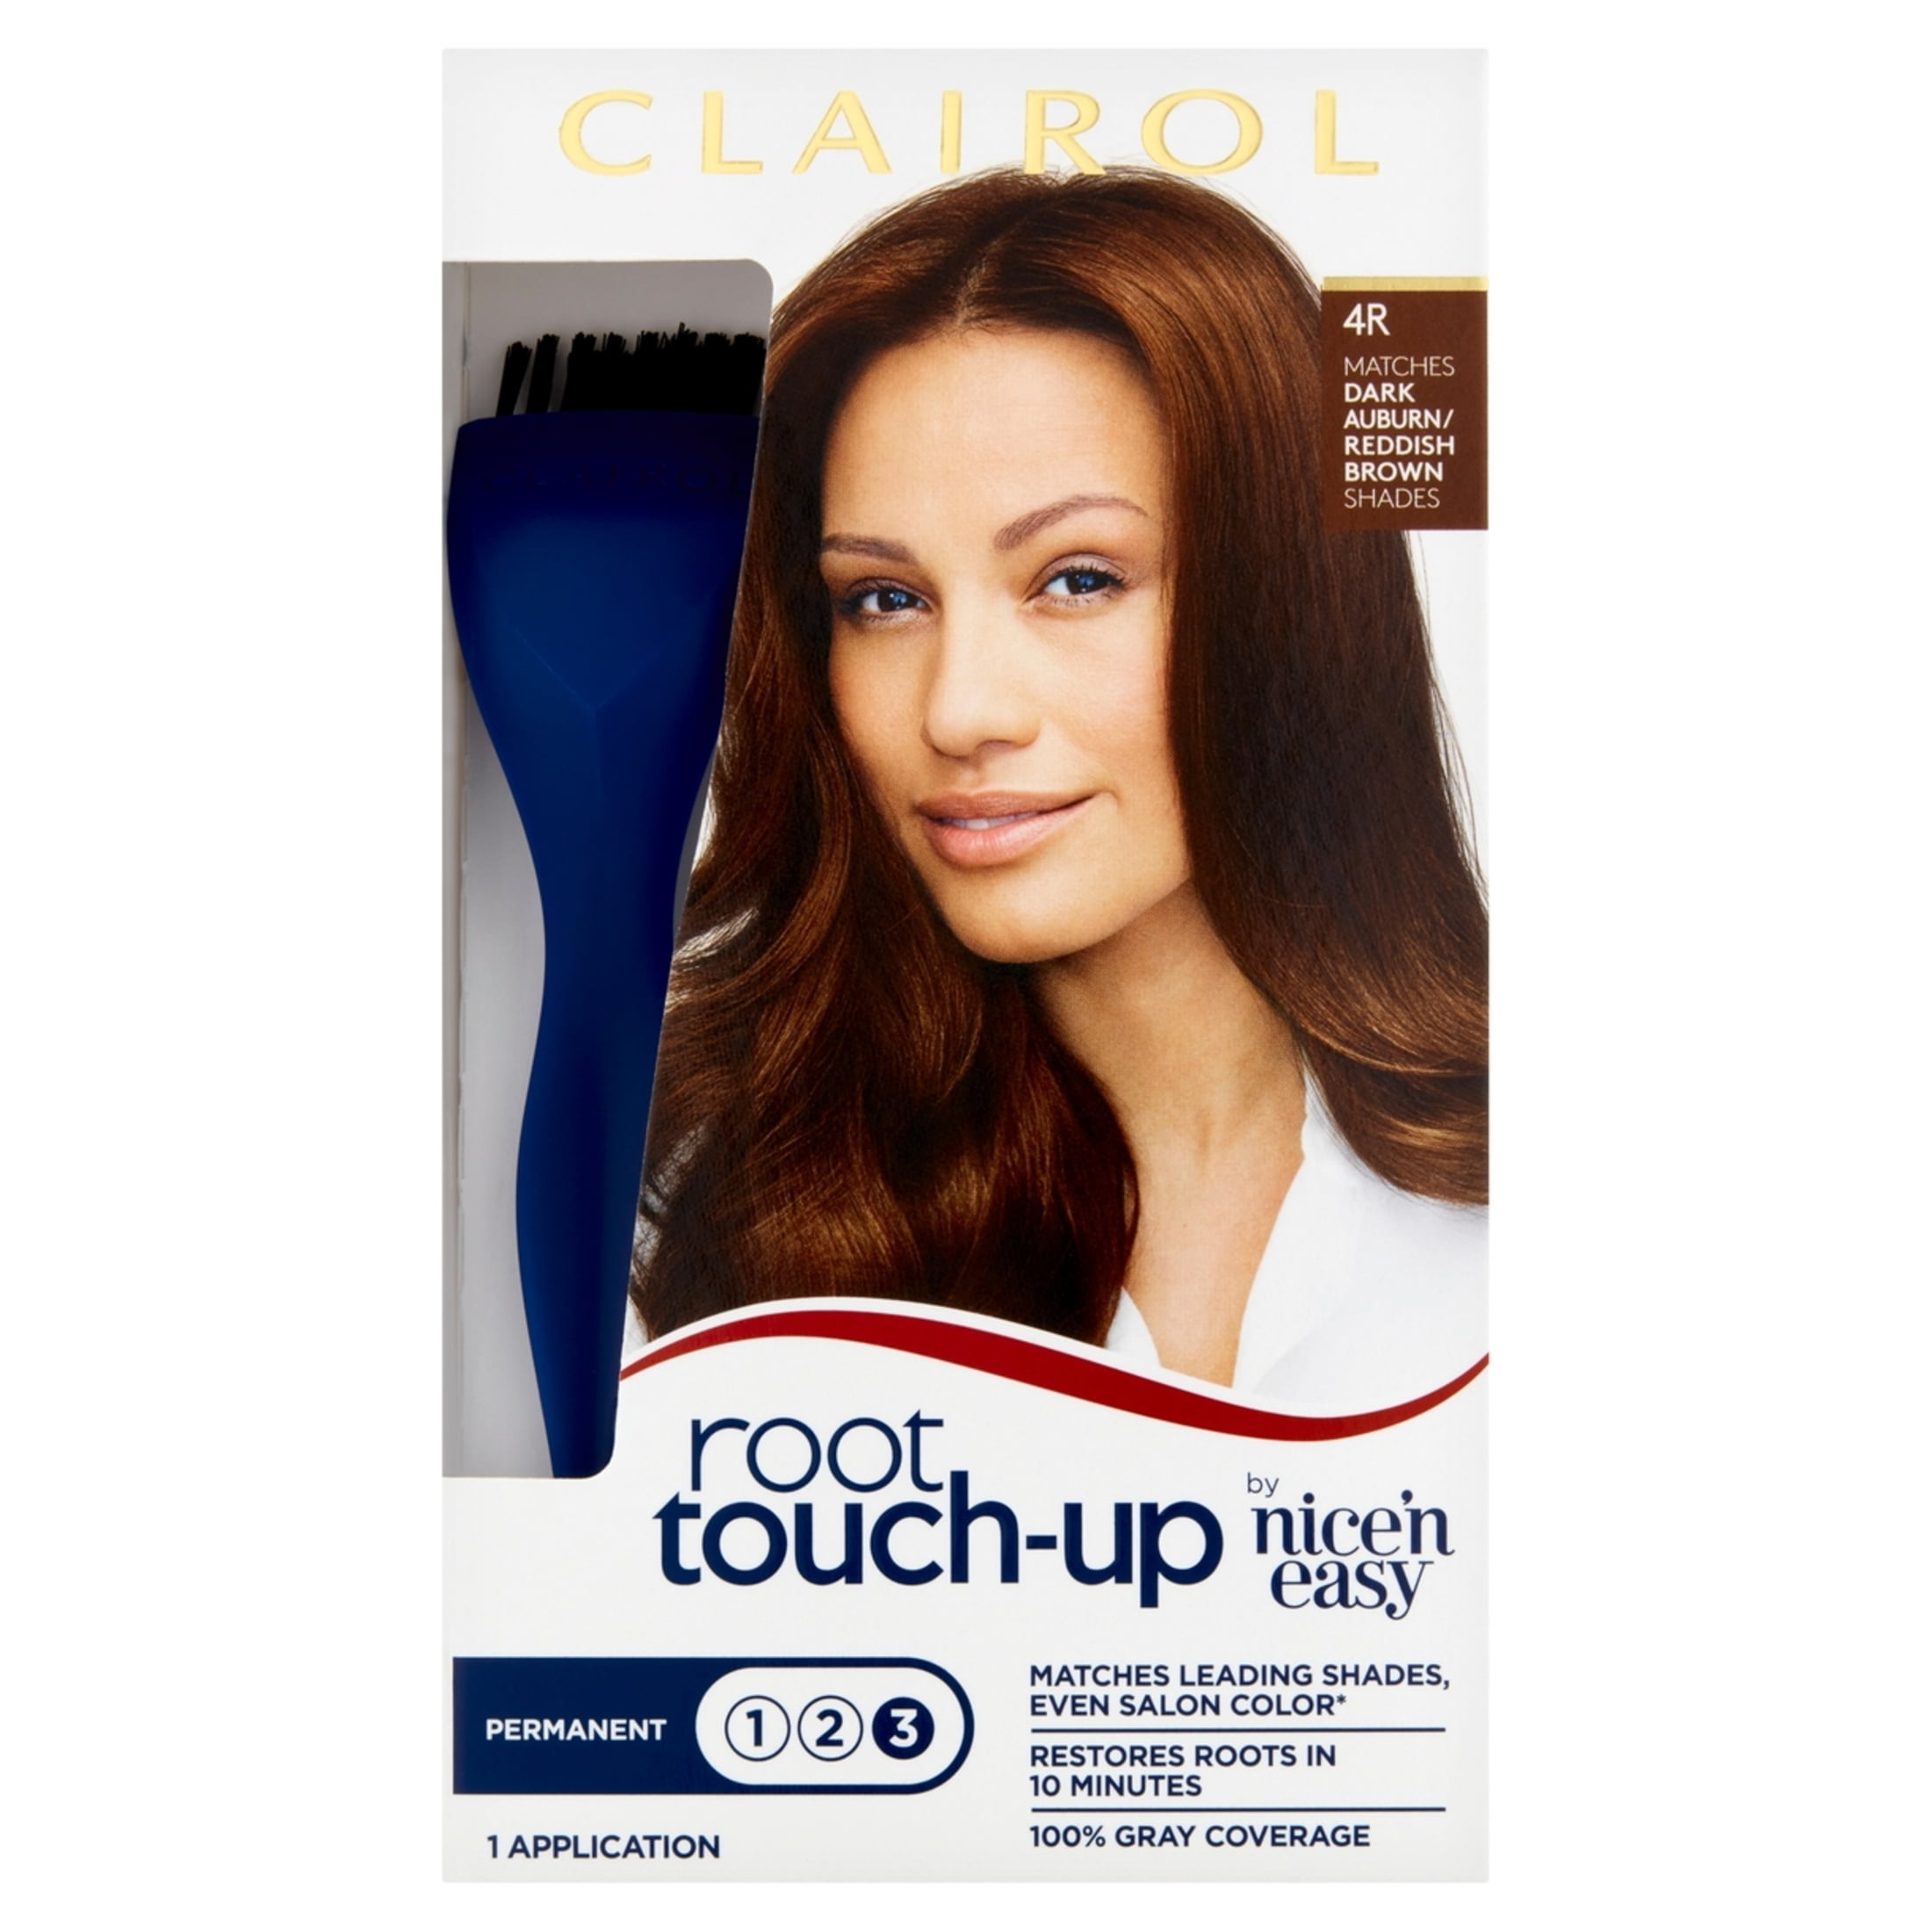 Clairol Root Touch-Up Permanent Hair Color Creme, 4R Matches Dark Auburn/Reddish  Brown Shades, 1 Application, Hair Dye 